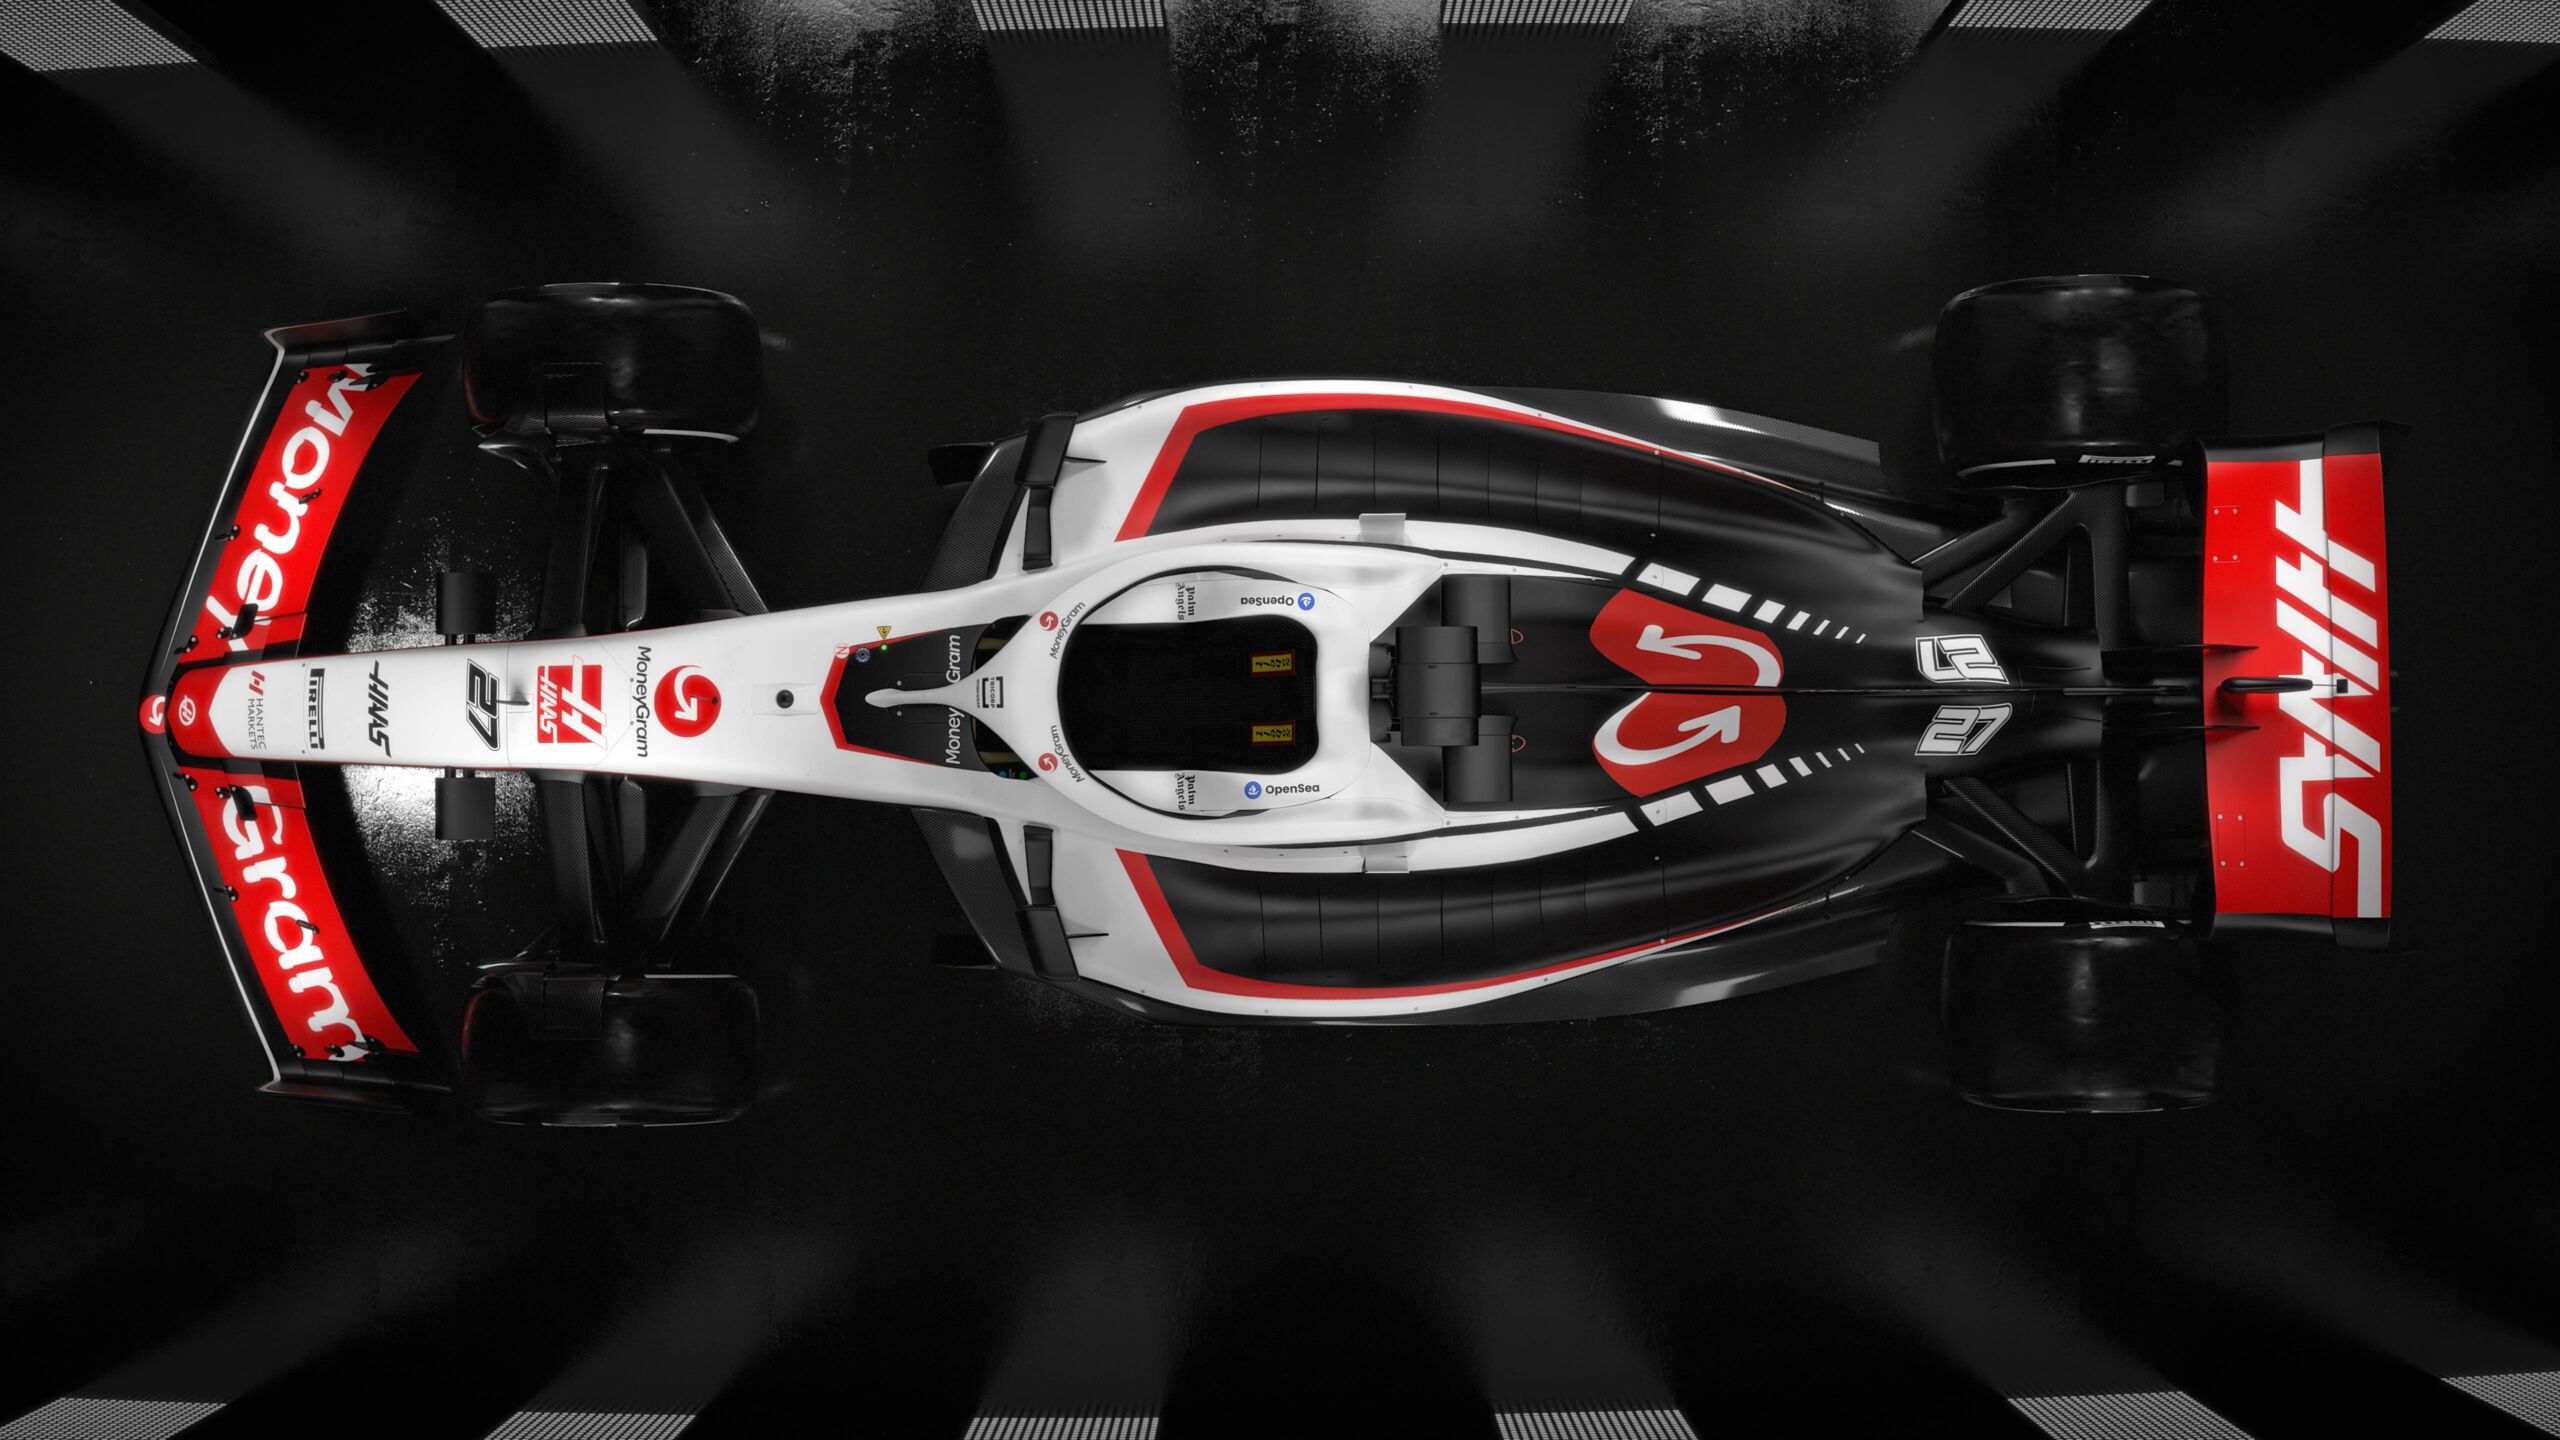 Vf 23 Livery - MoneyGram Haas F1 Team 